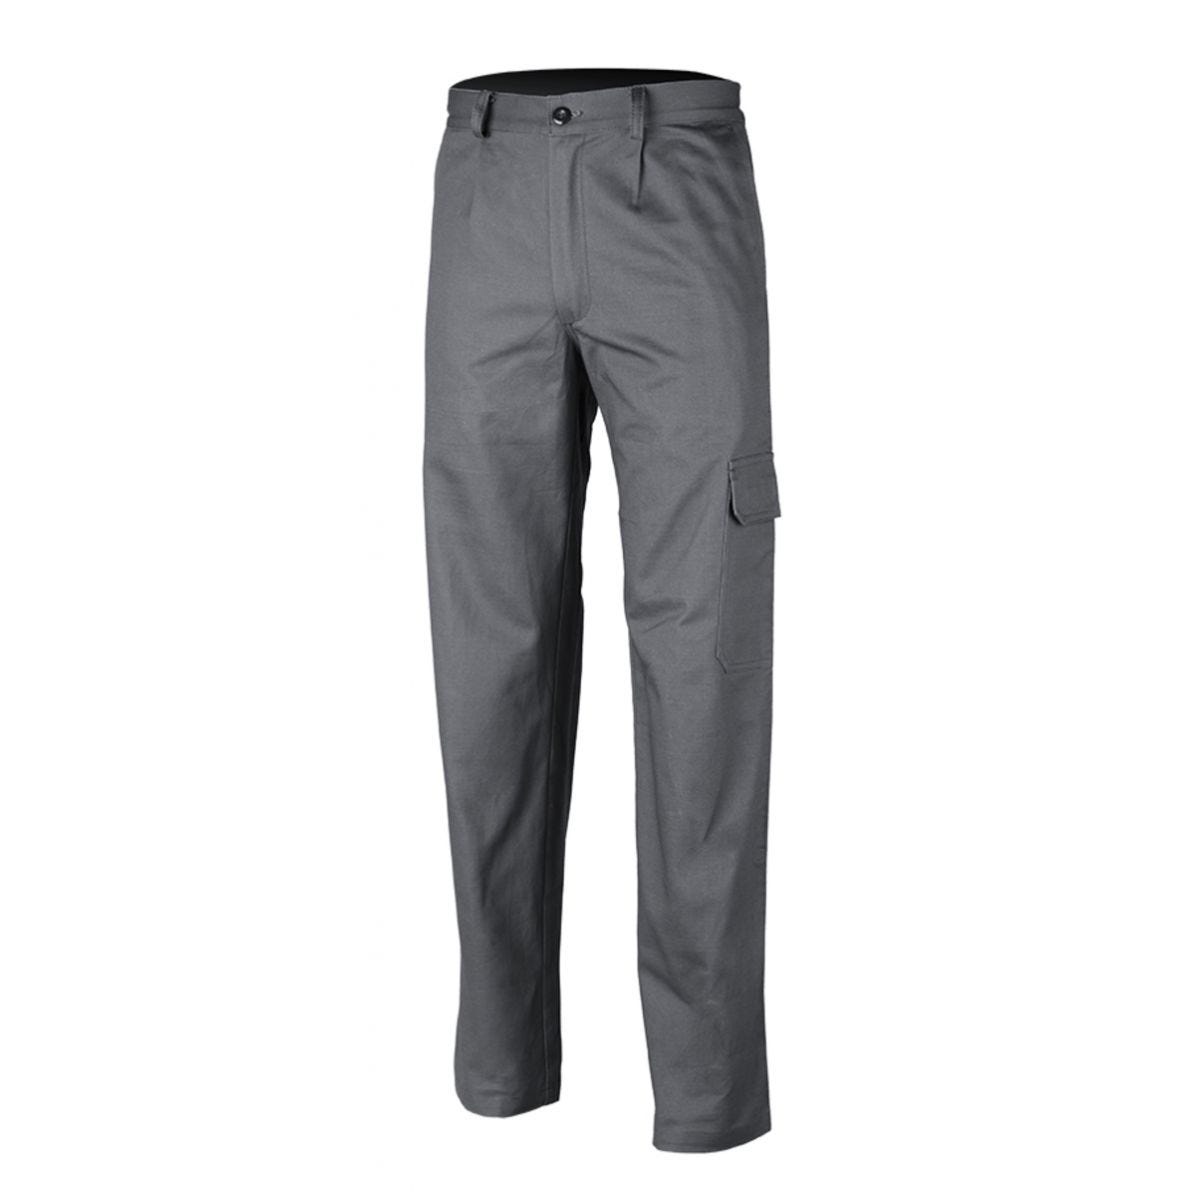 Pantalon INDUSTRY gris - COVERGUARD - Taille S 0